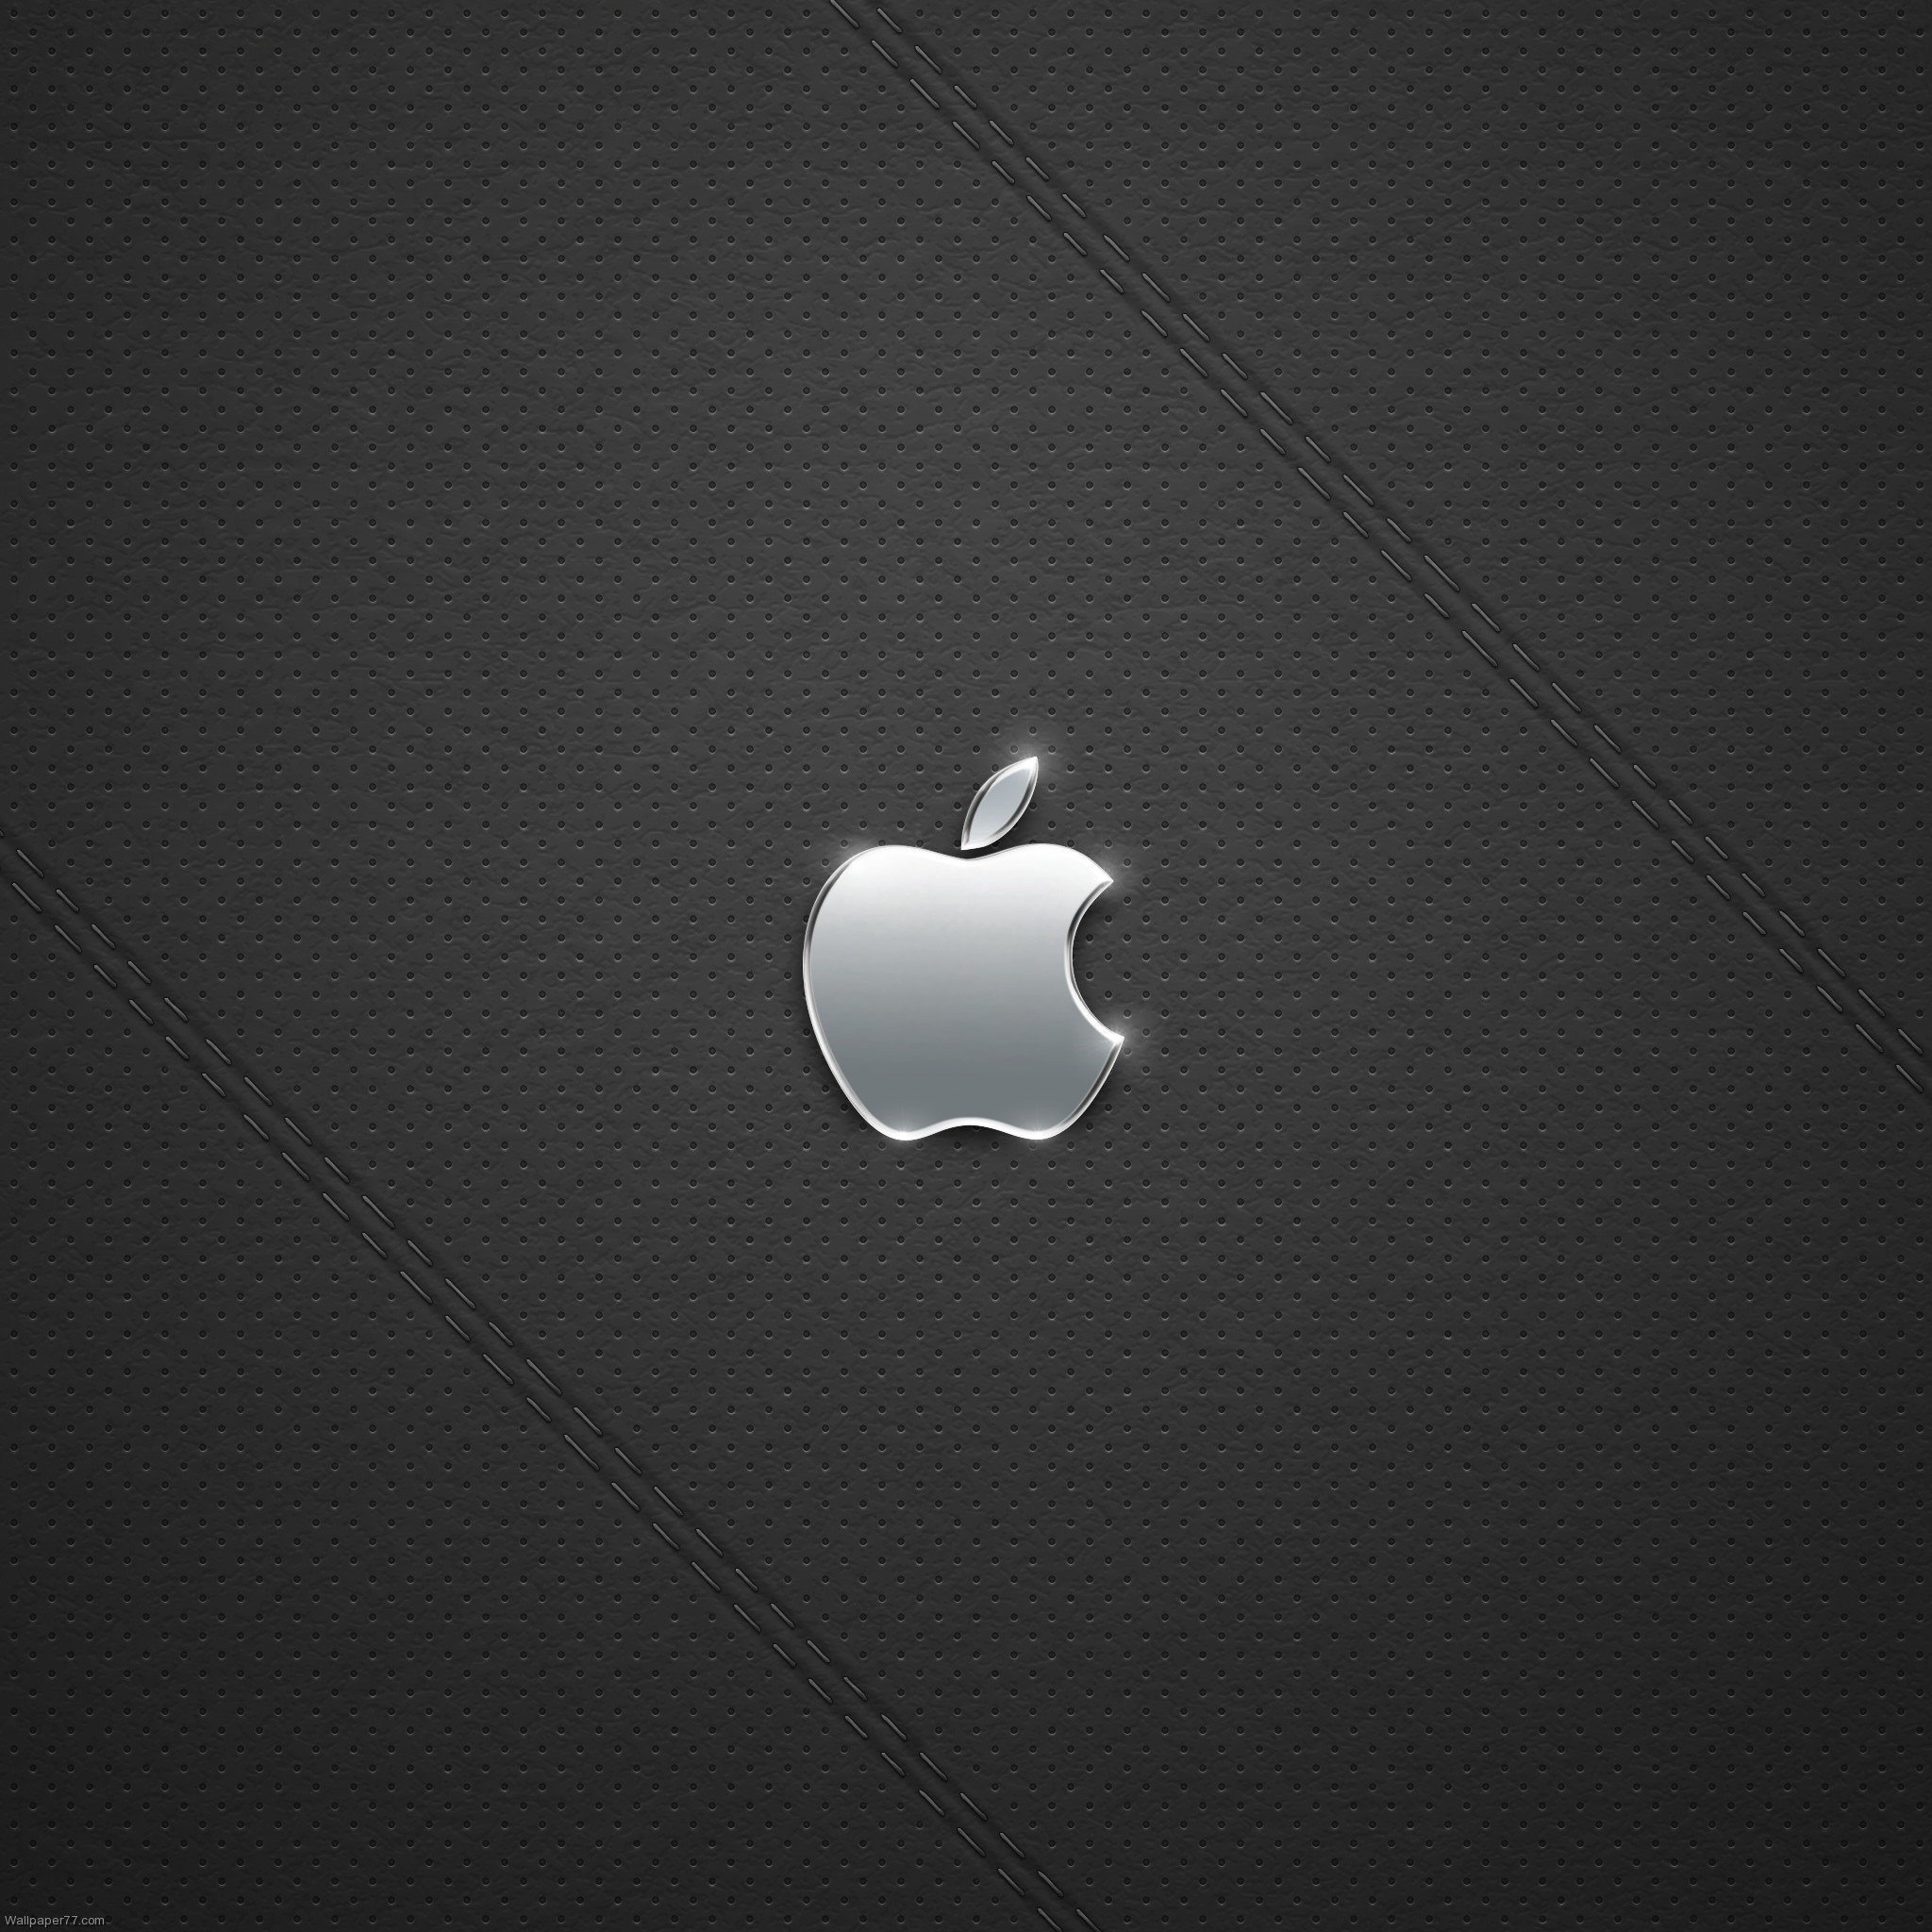 iPad Wallpaper Retina Display The New